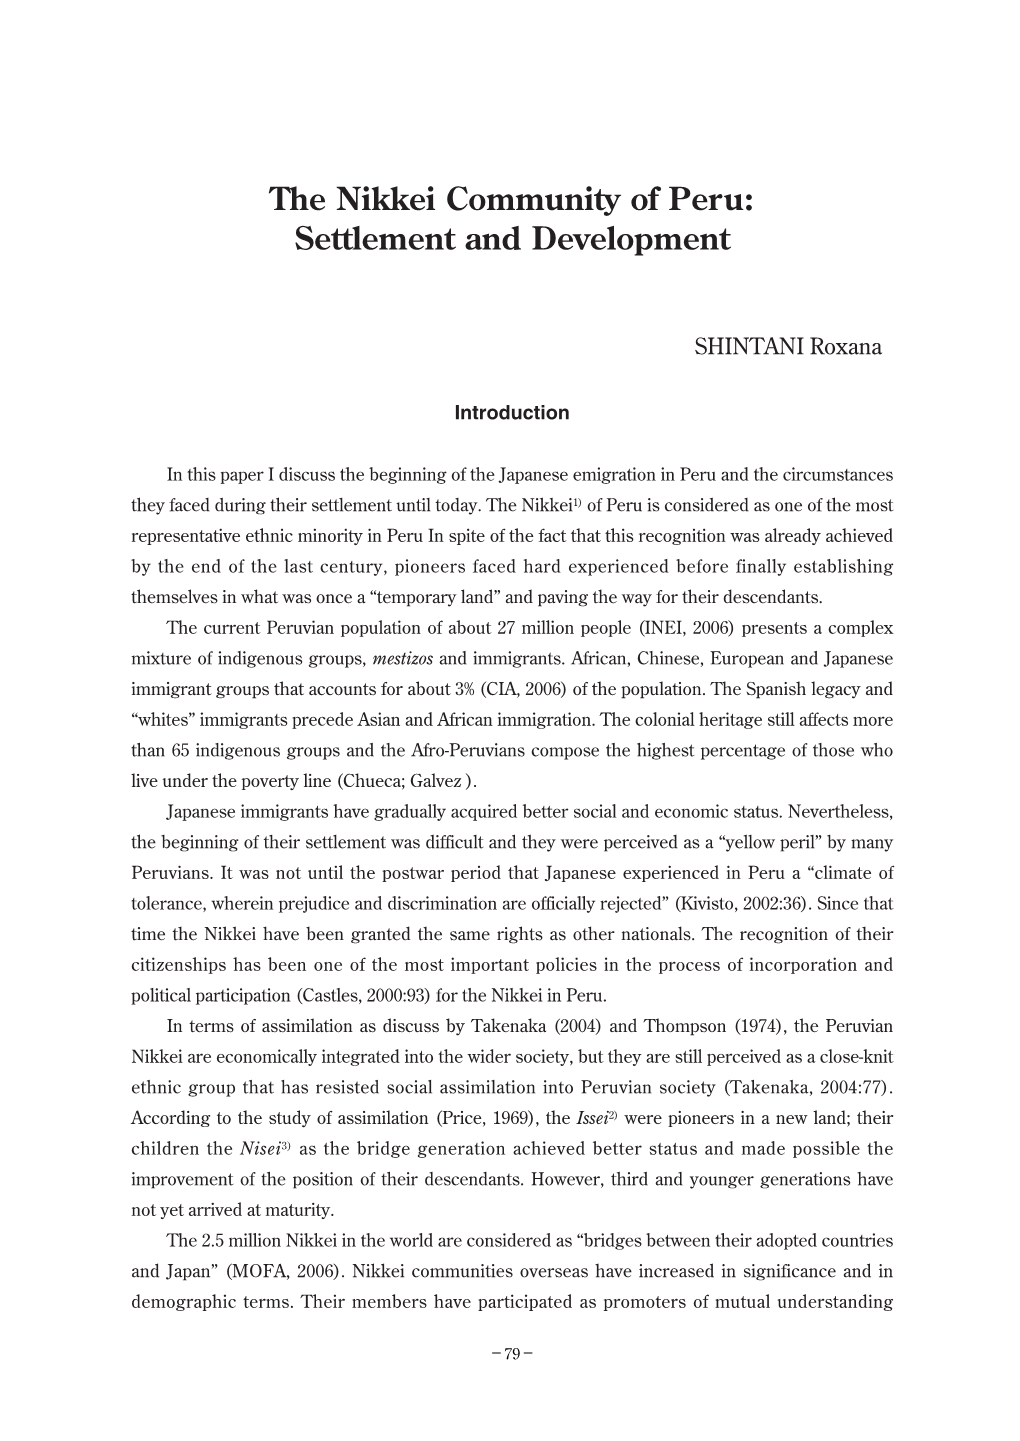 The Nikkei Community of Peru: Settlement and Development